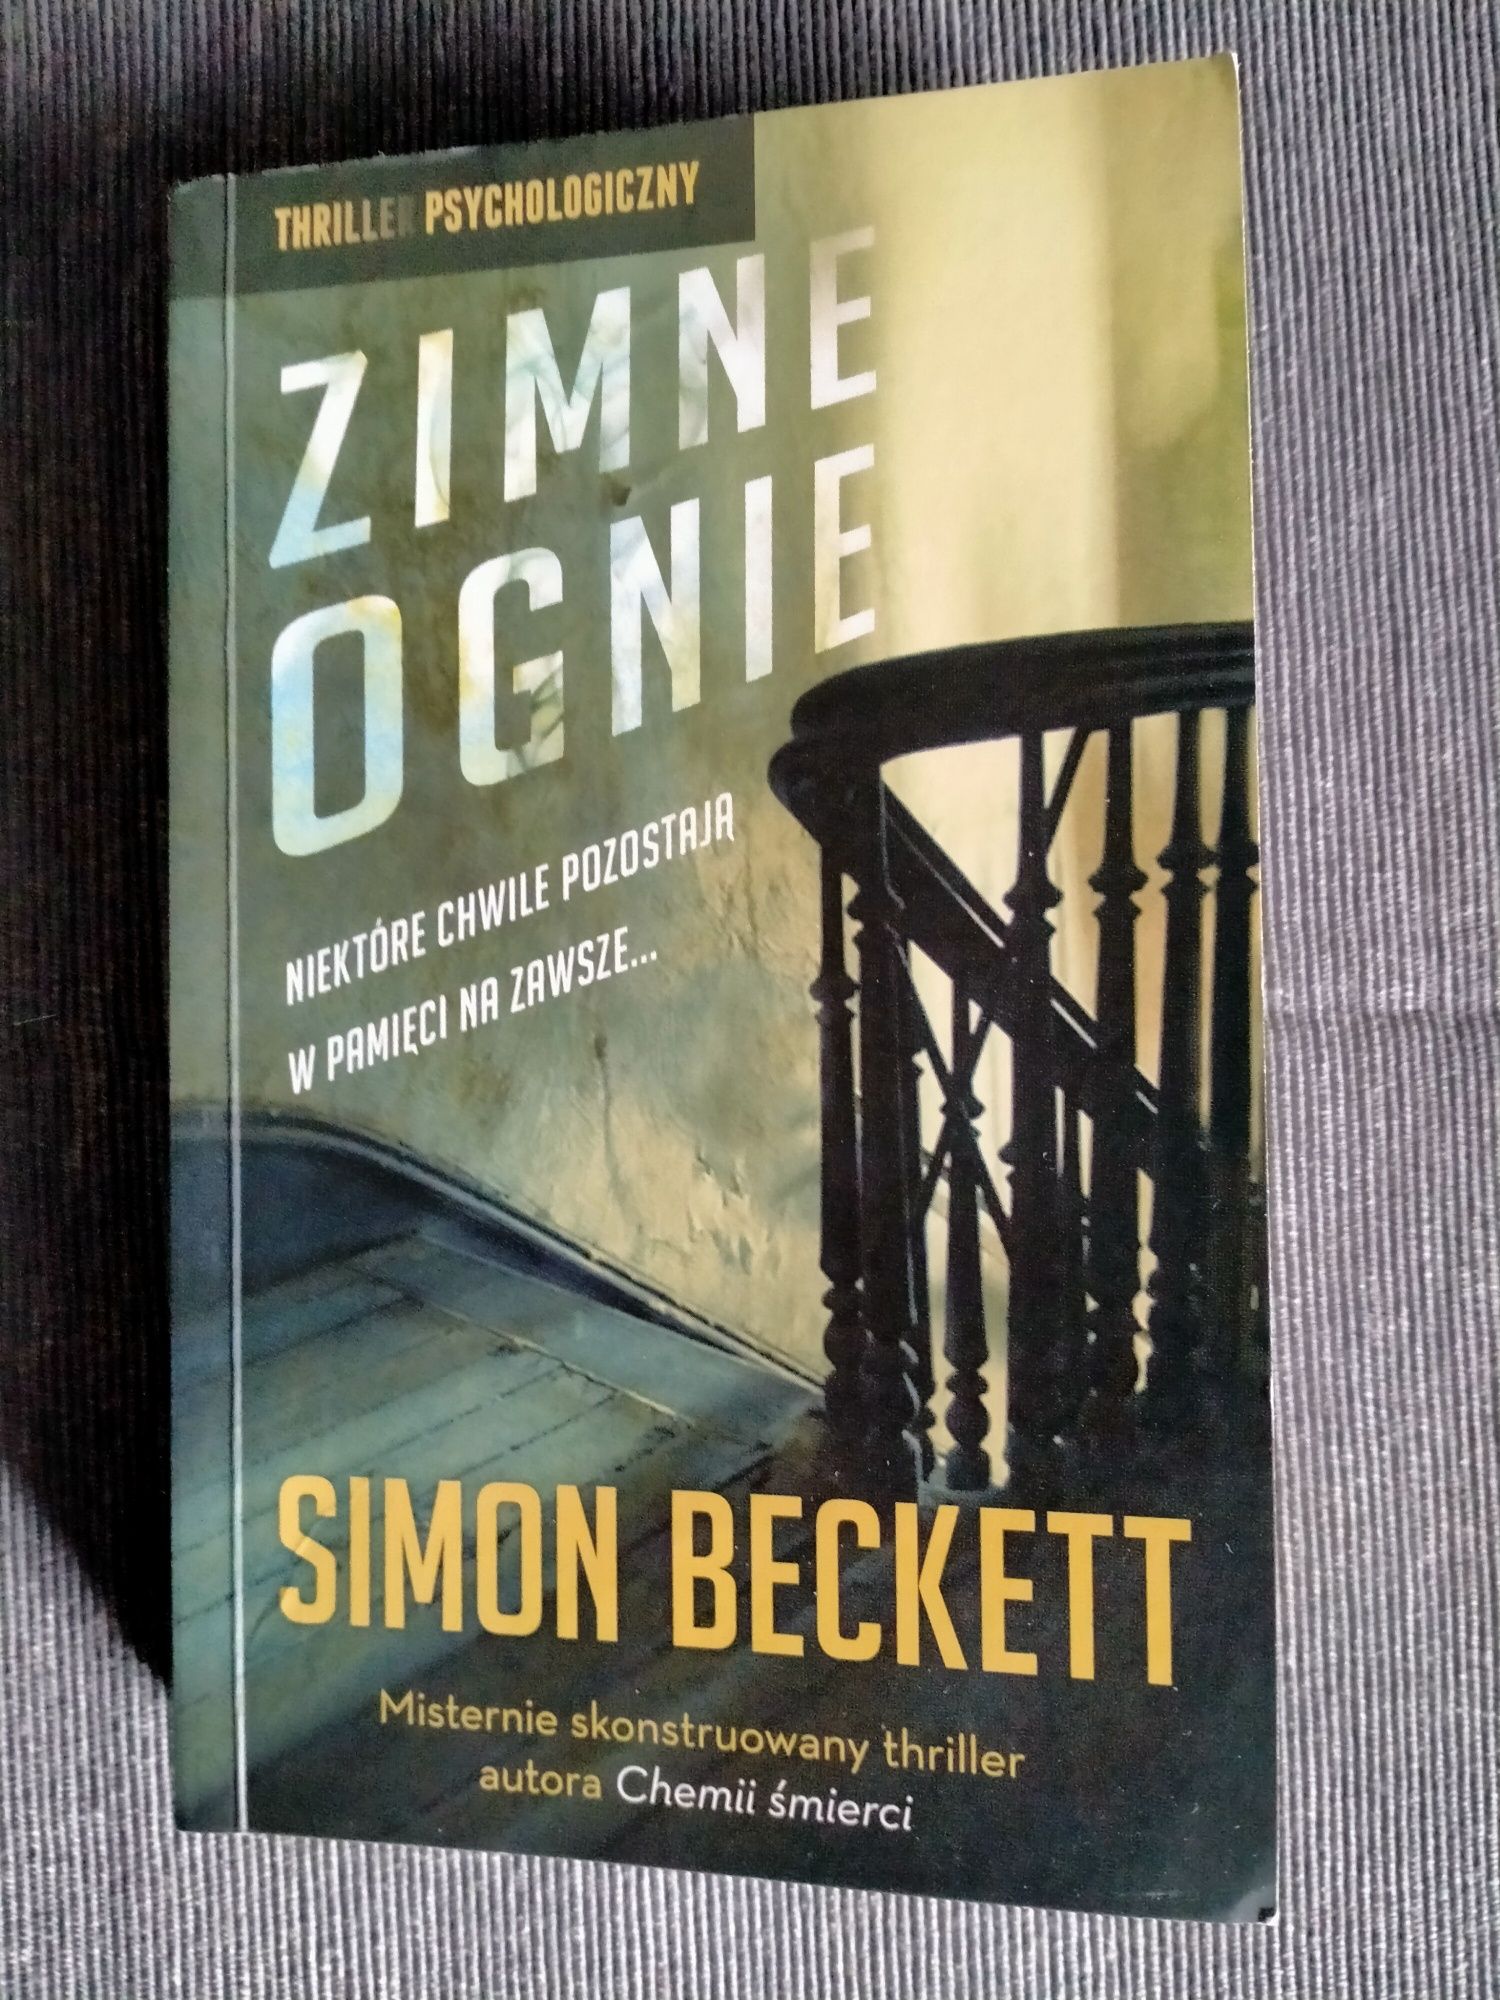 Simon beckett zimne ognie thriller powieść miękka okładka